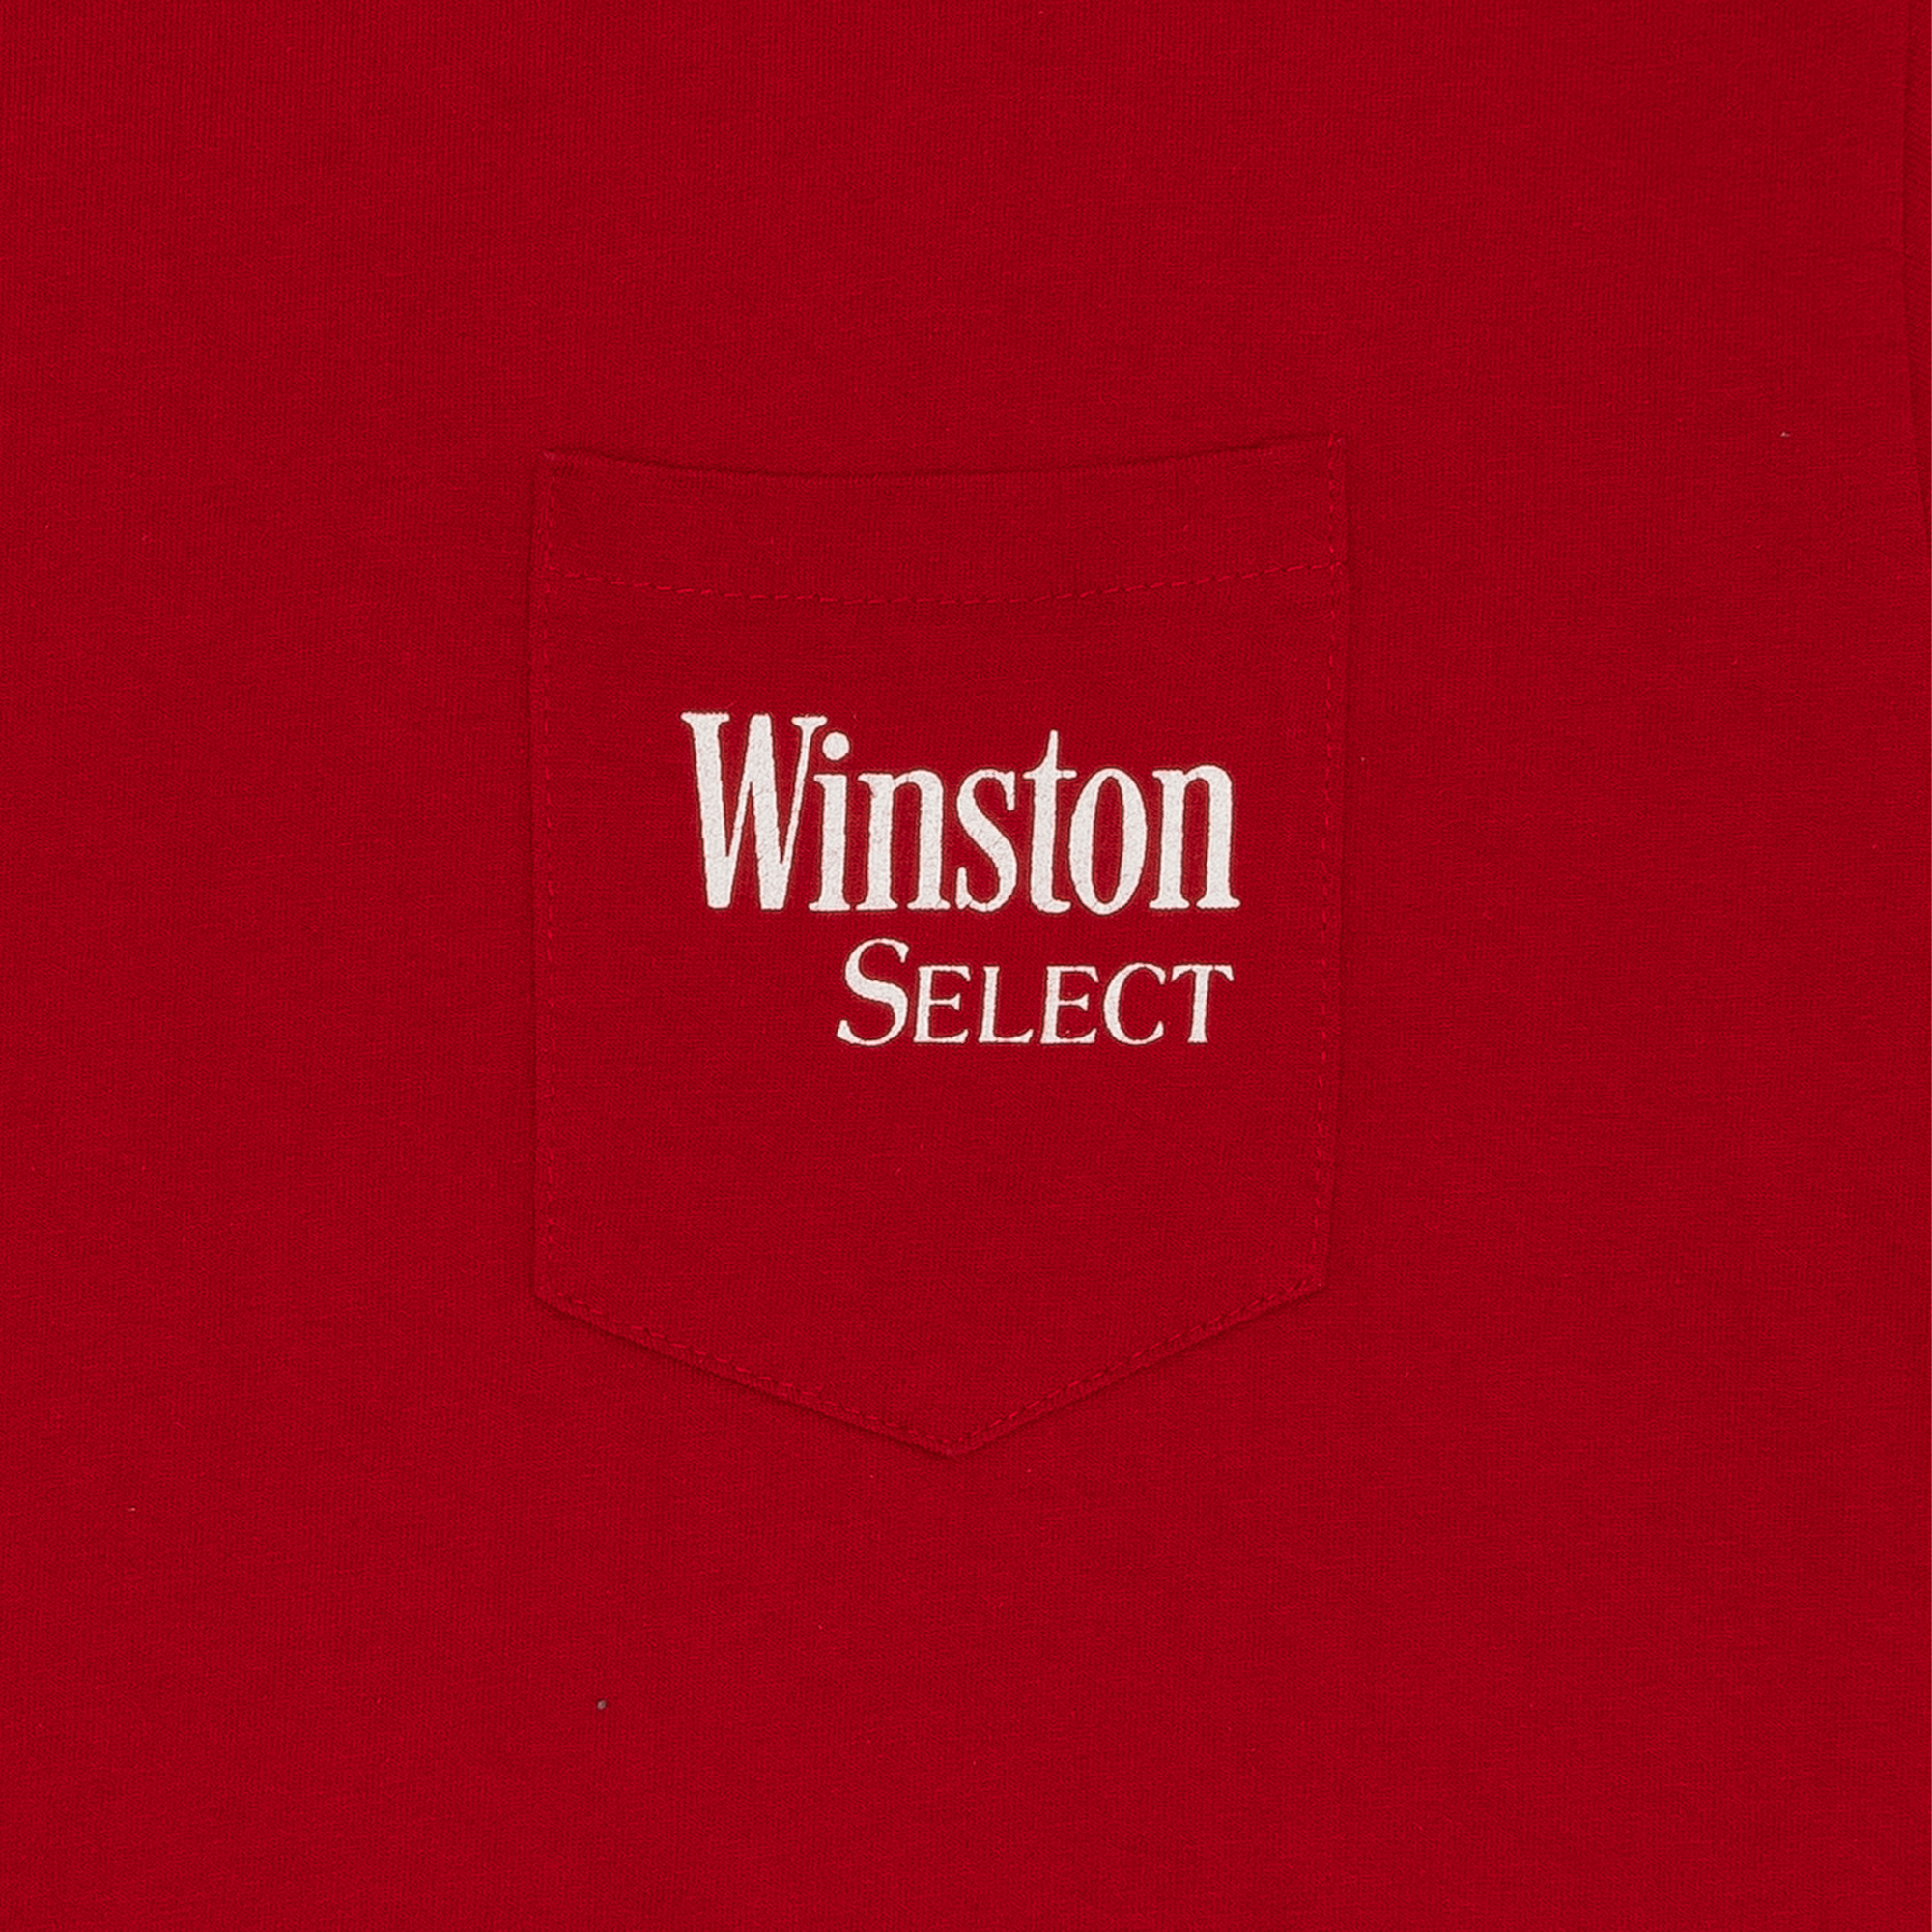 Winston Cigarettes Golden Eagle Tee Red-PLUS